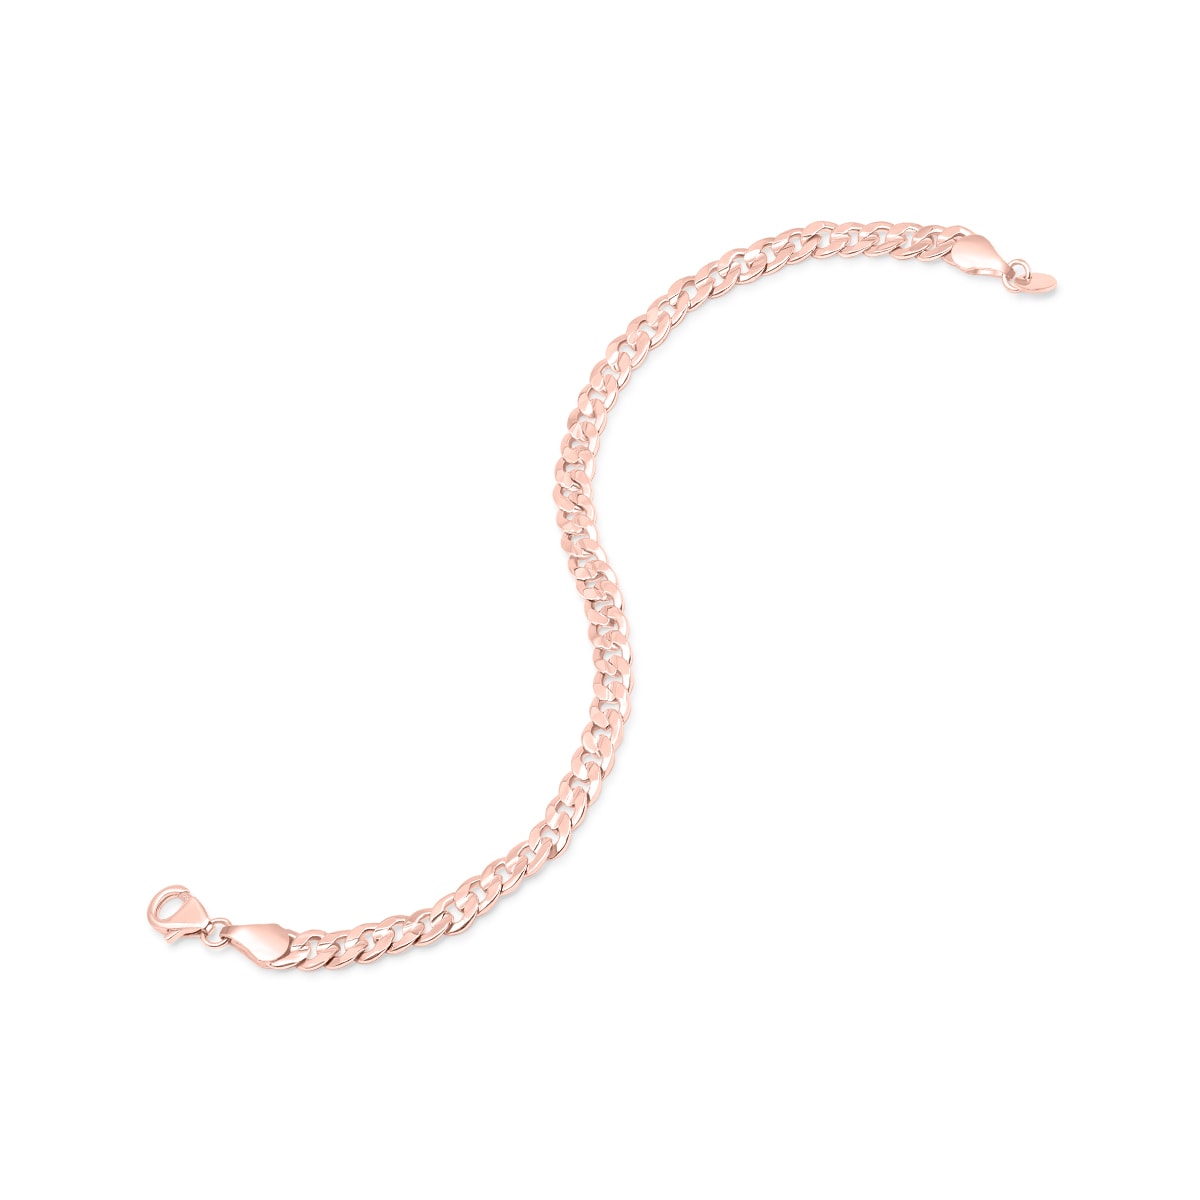 Affordable rose gold cuban chain bracelet